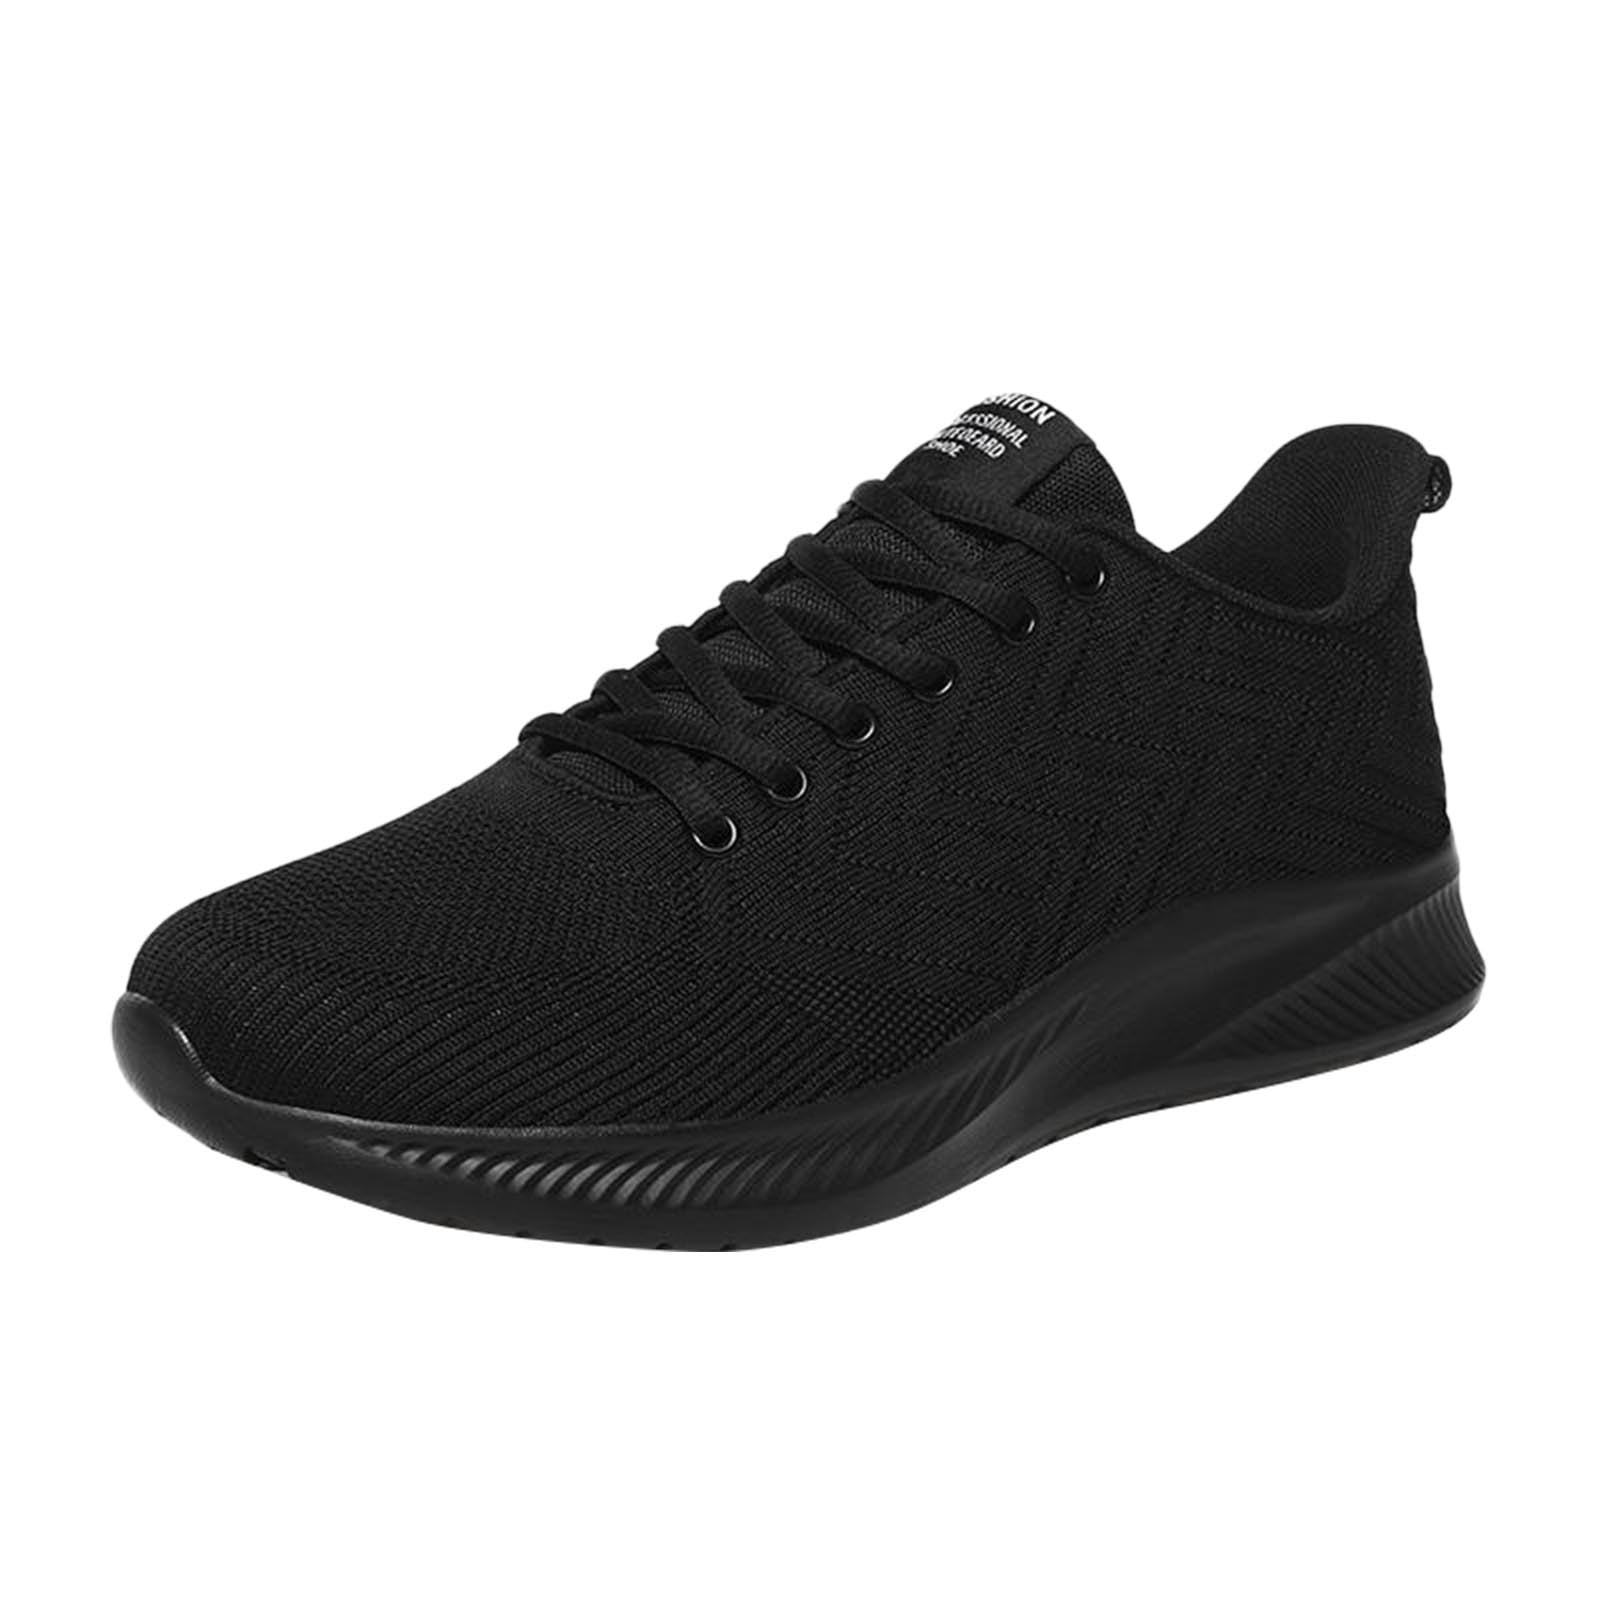 KaLI_store Golf Shoes Men Men's Sneakers Walking Shoes for Men Fashion  Lightweight Breathable Running Shoes Sport Tennis Shoes Black,10 